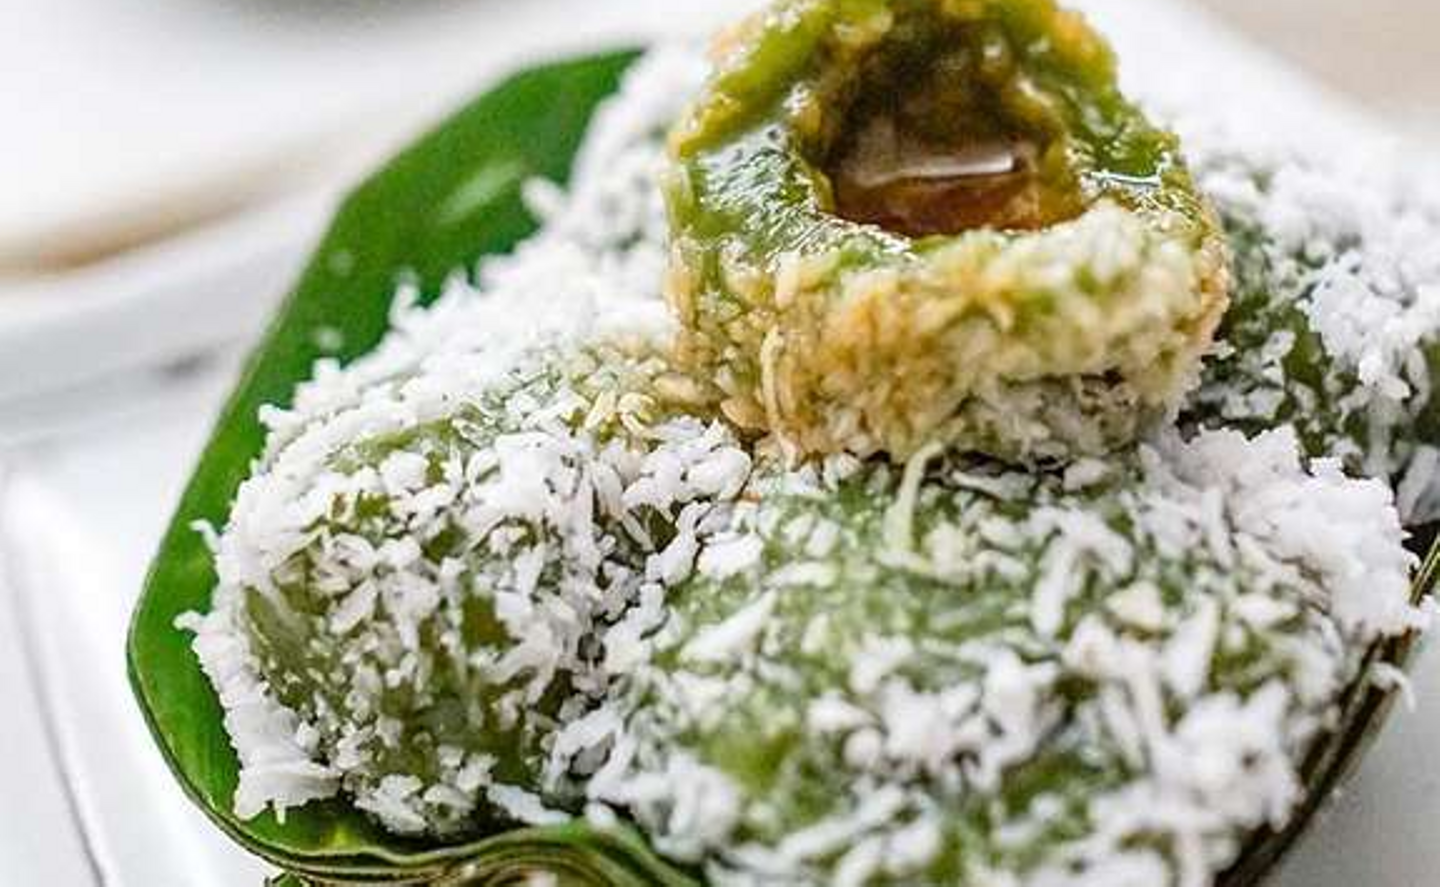  Unik  9 Wadah Makanan  Tradisional Khas Indonesia Ini dari 